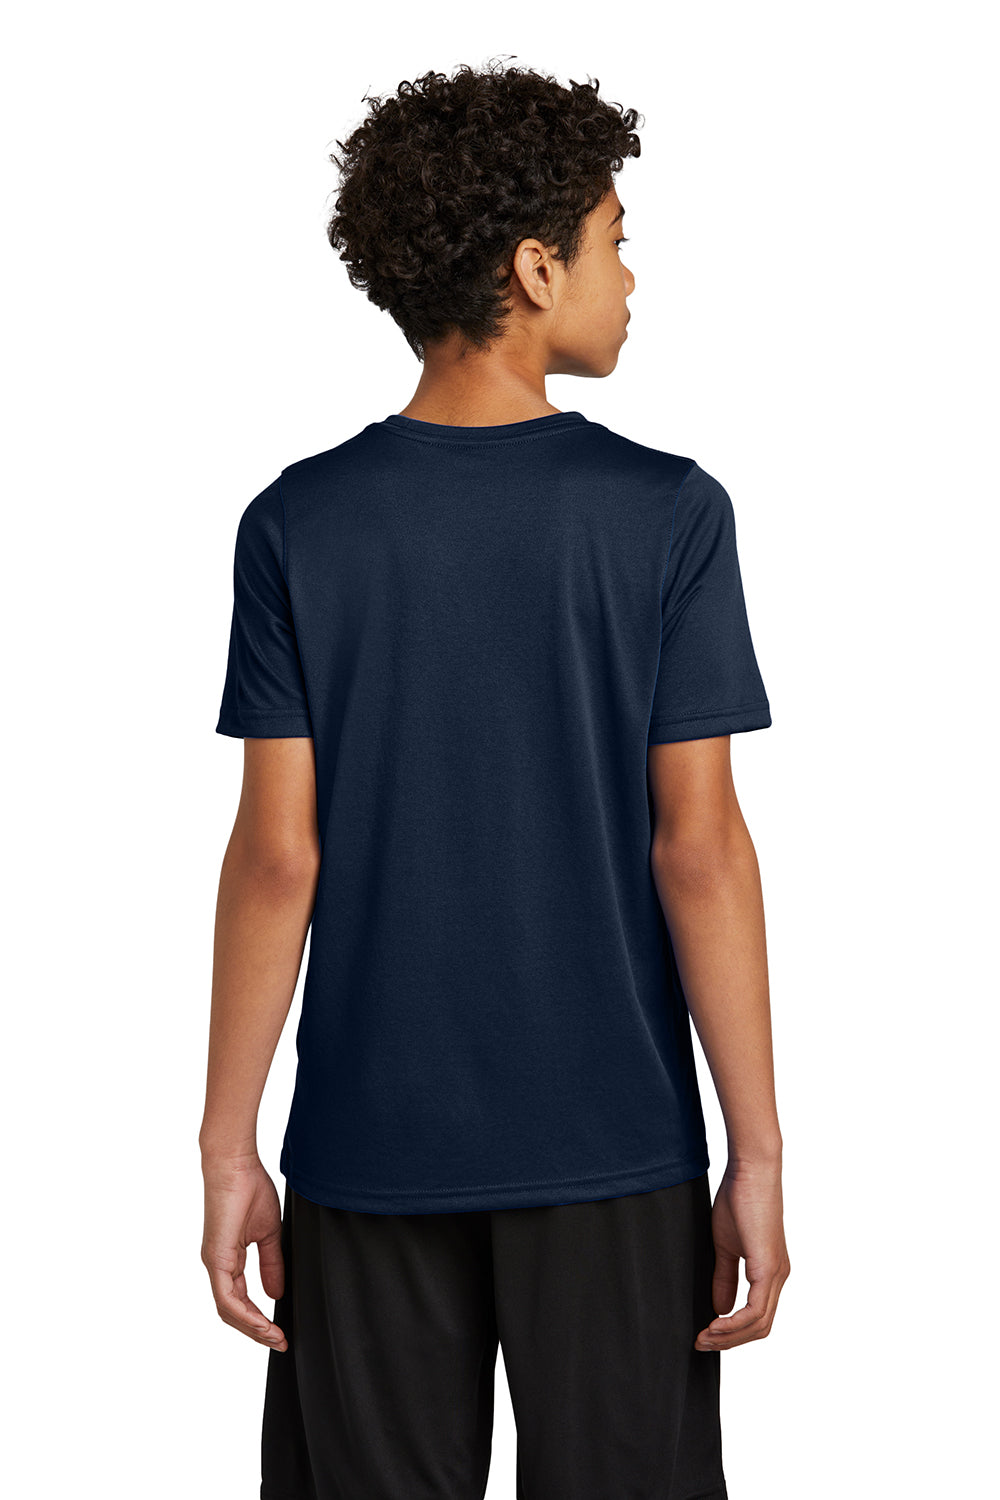 Nike NKDX8787 Youth rLegend Dri-Fit Moisture Wicking Short Sleeve Crewneck T-Shirt College Navy Blue Model Back